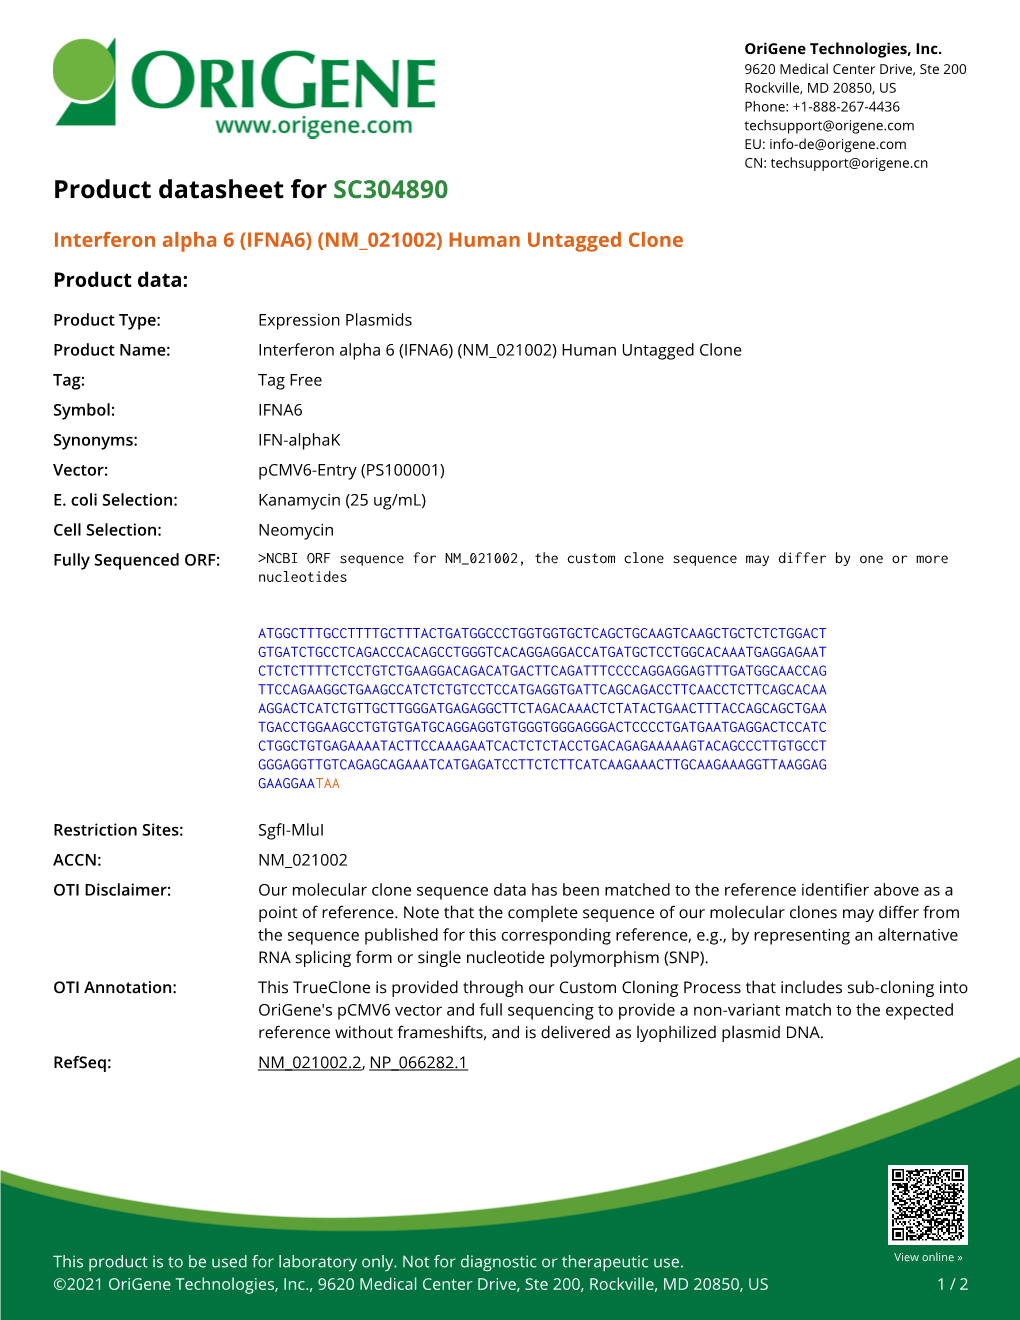 Interferon Alpha 6 (IFNA6) (NM 021002) Human Untagged Clone Product Data